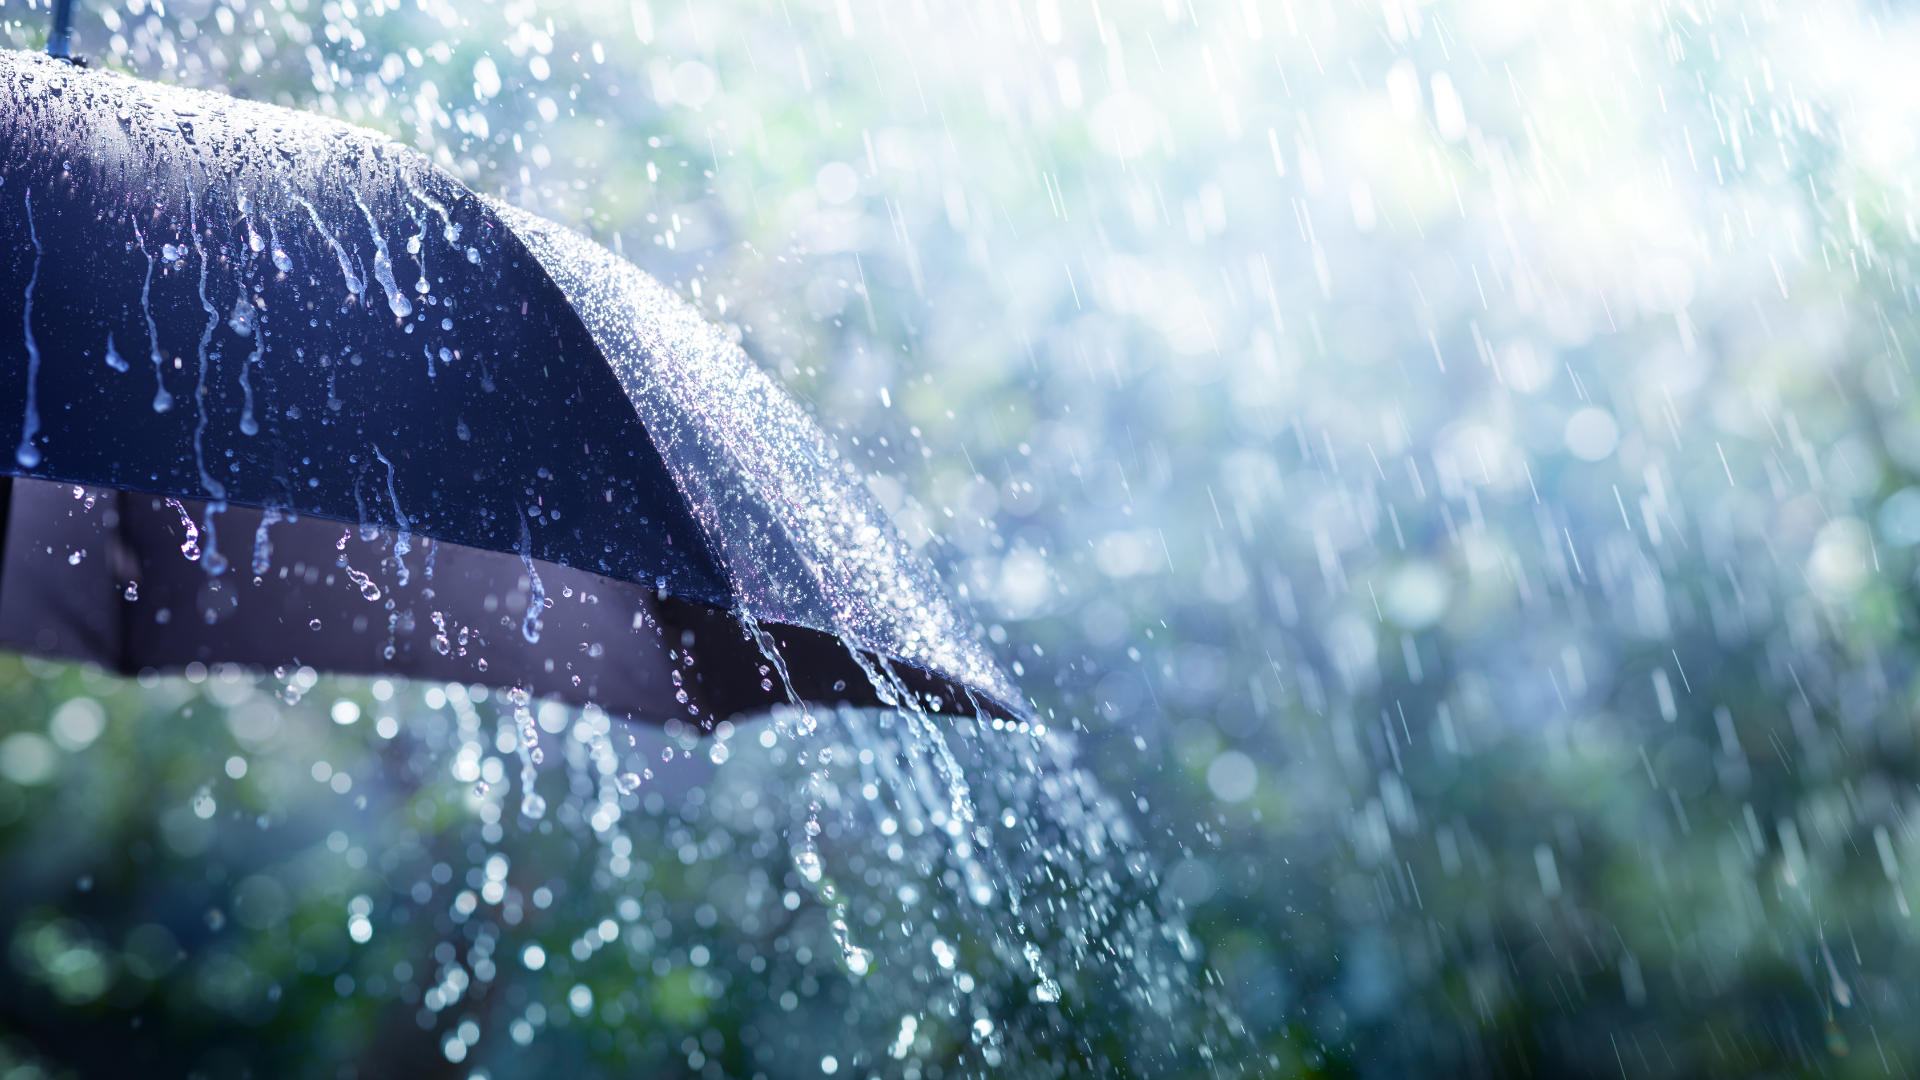 Umbrella and rain image